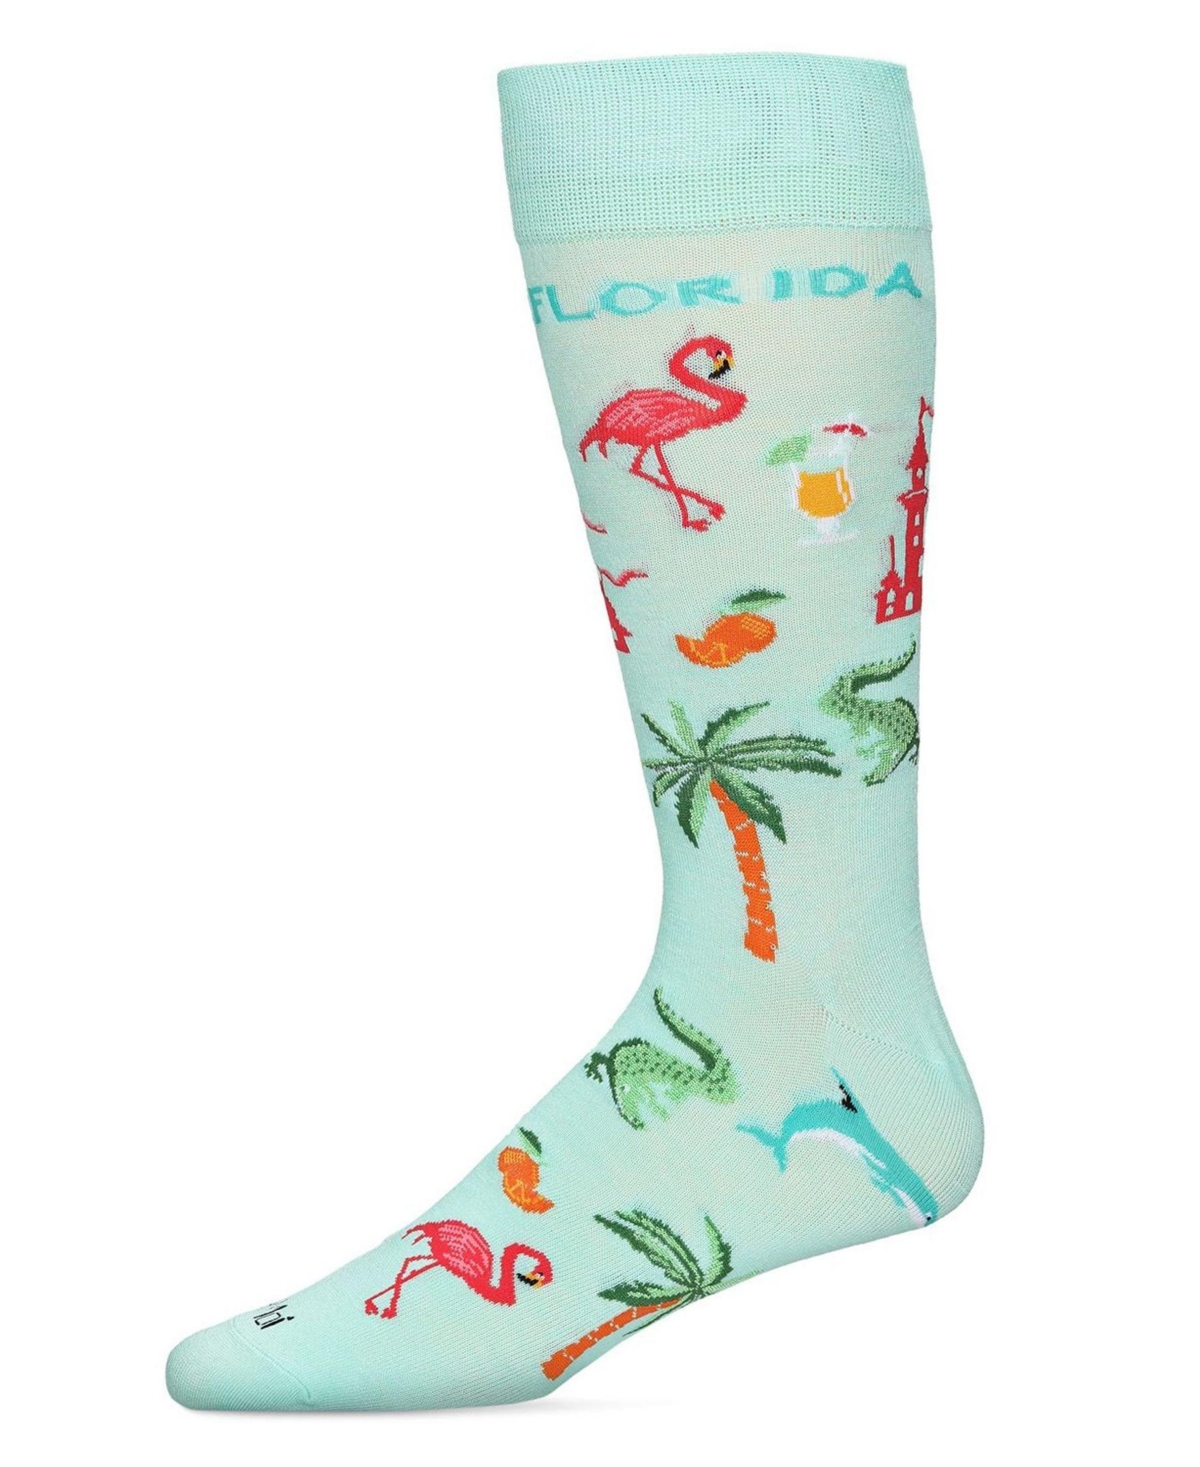 Men's Florida Sun Fun Novelty Crew Socks - Seafoam